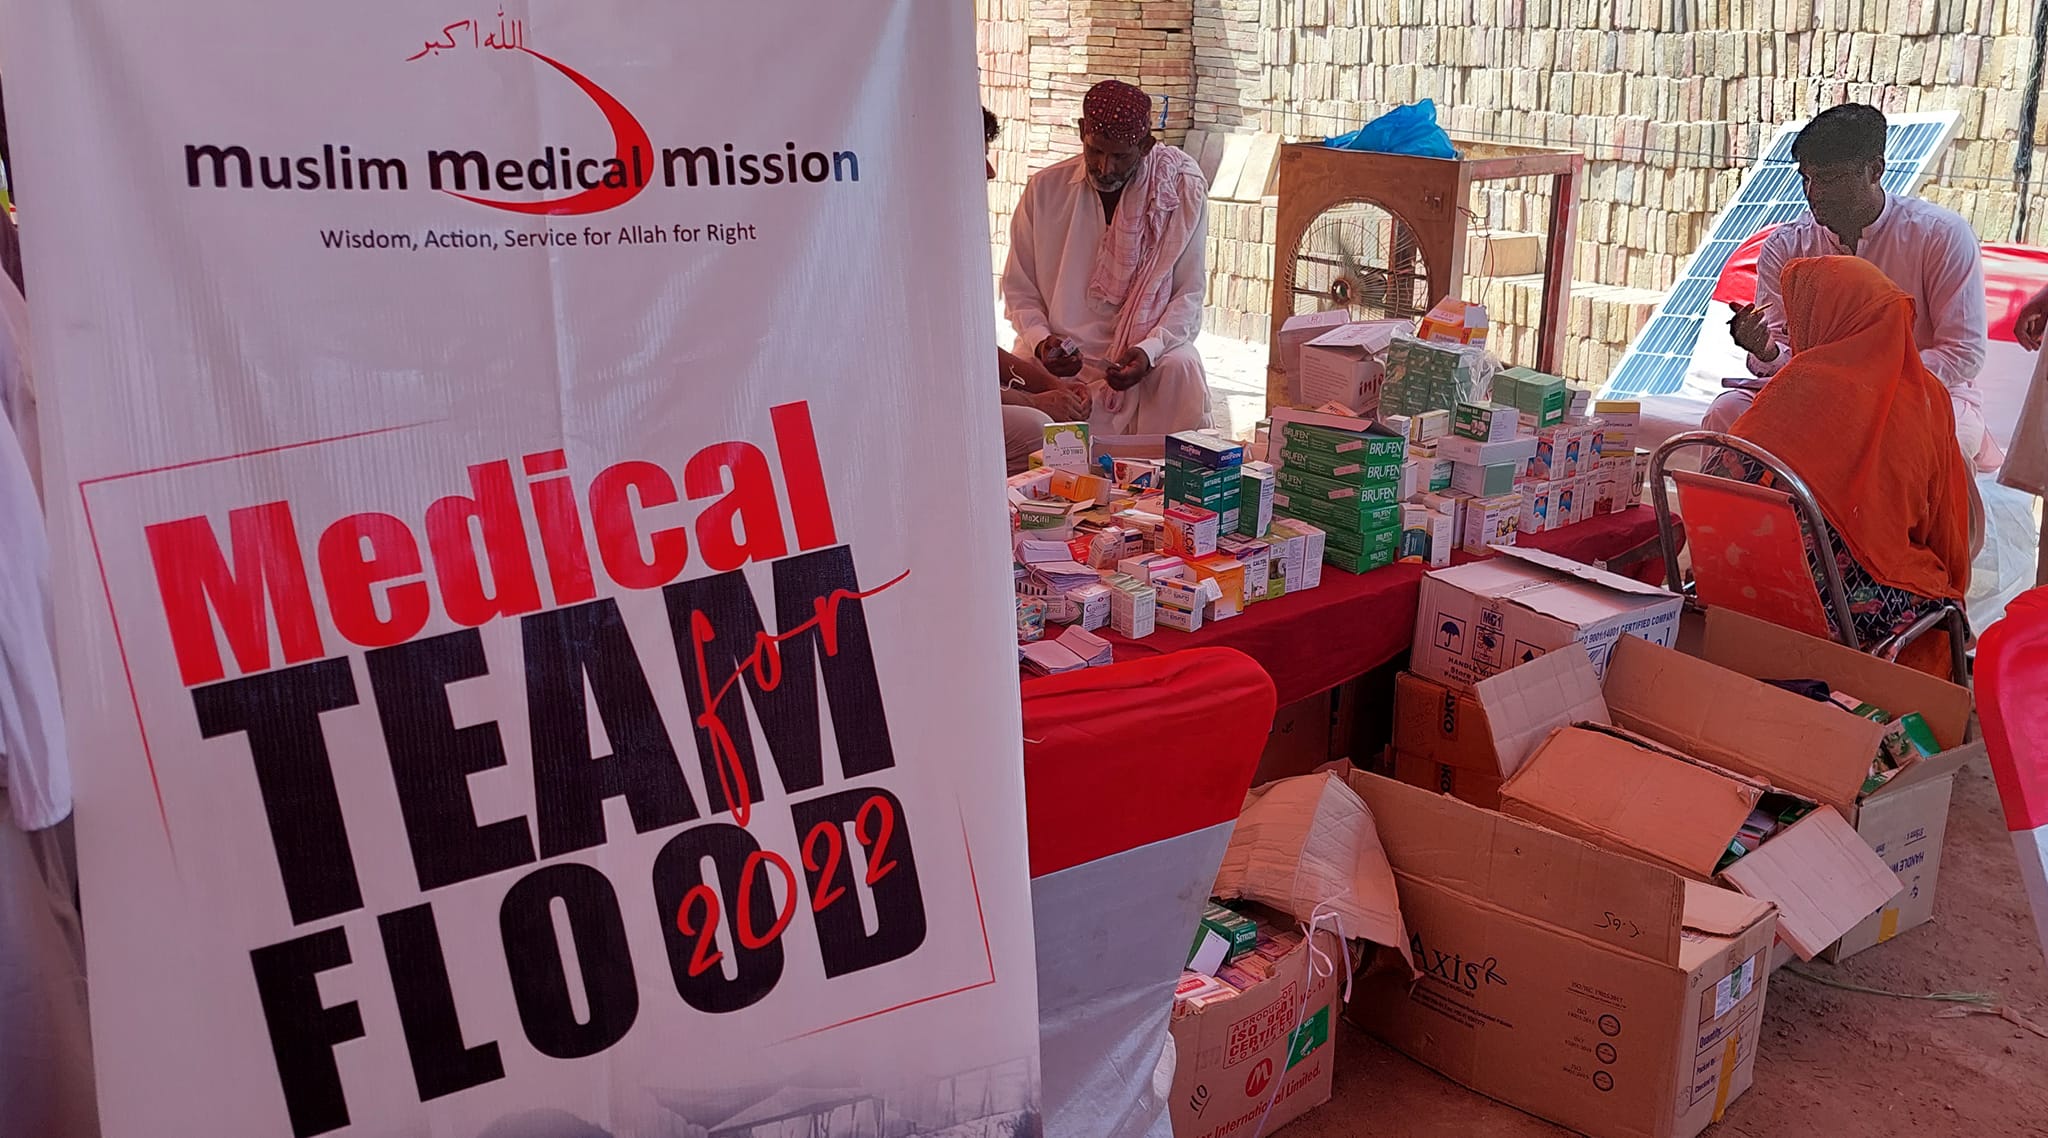 Muslim Medical Mission